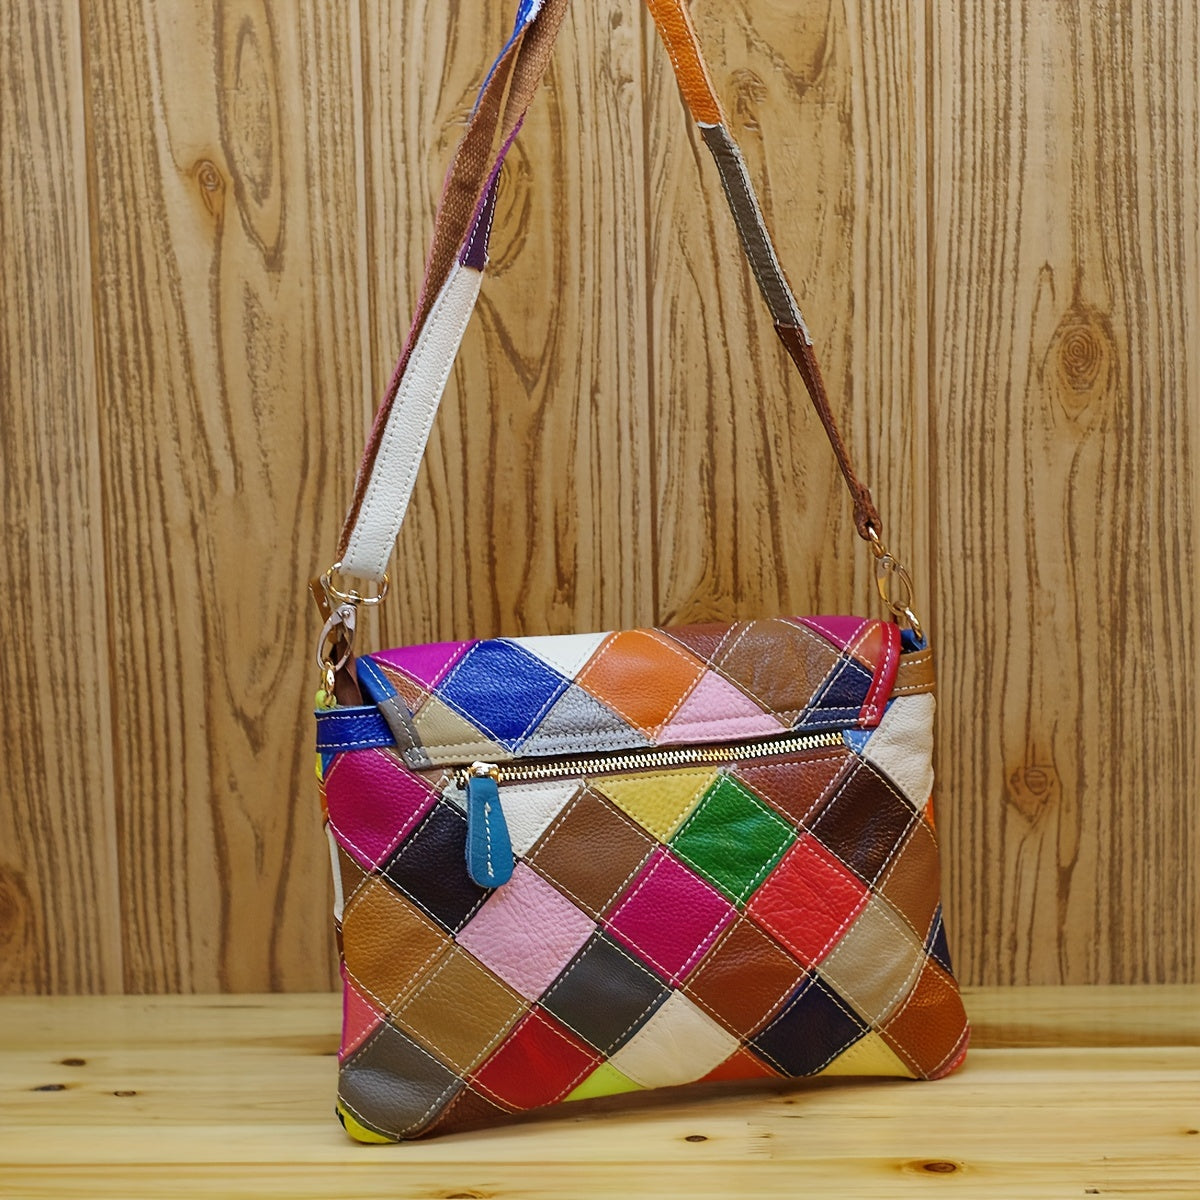 Trendy Genuine Leather Flap Crossbody Bag, Contrast Color Argyle Plaid Shoulder Bag, Perfect Messenger Bag For Daily Use